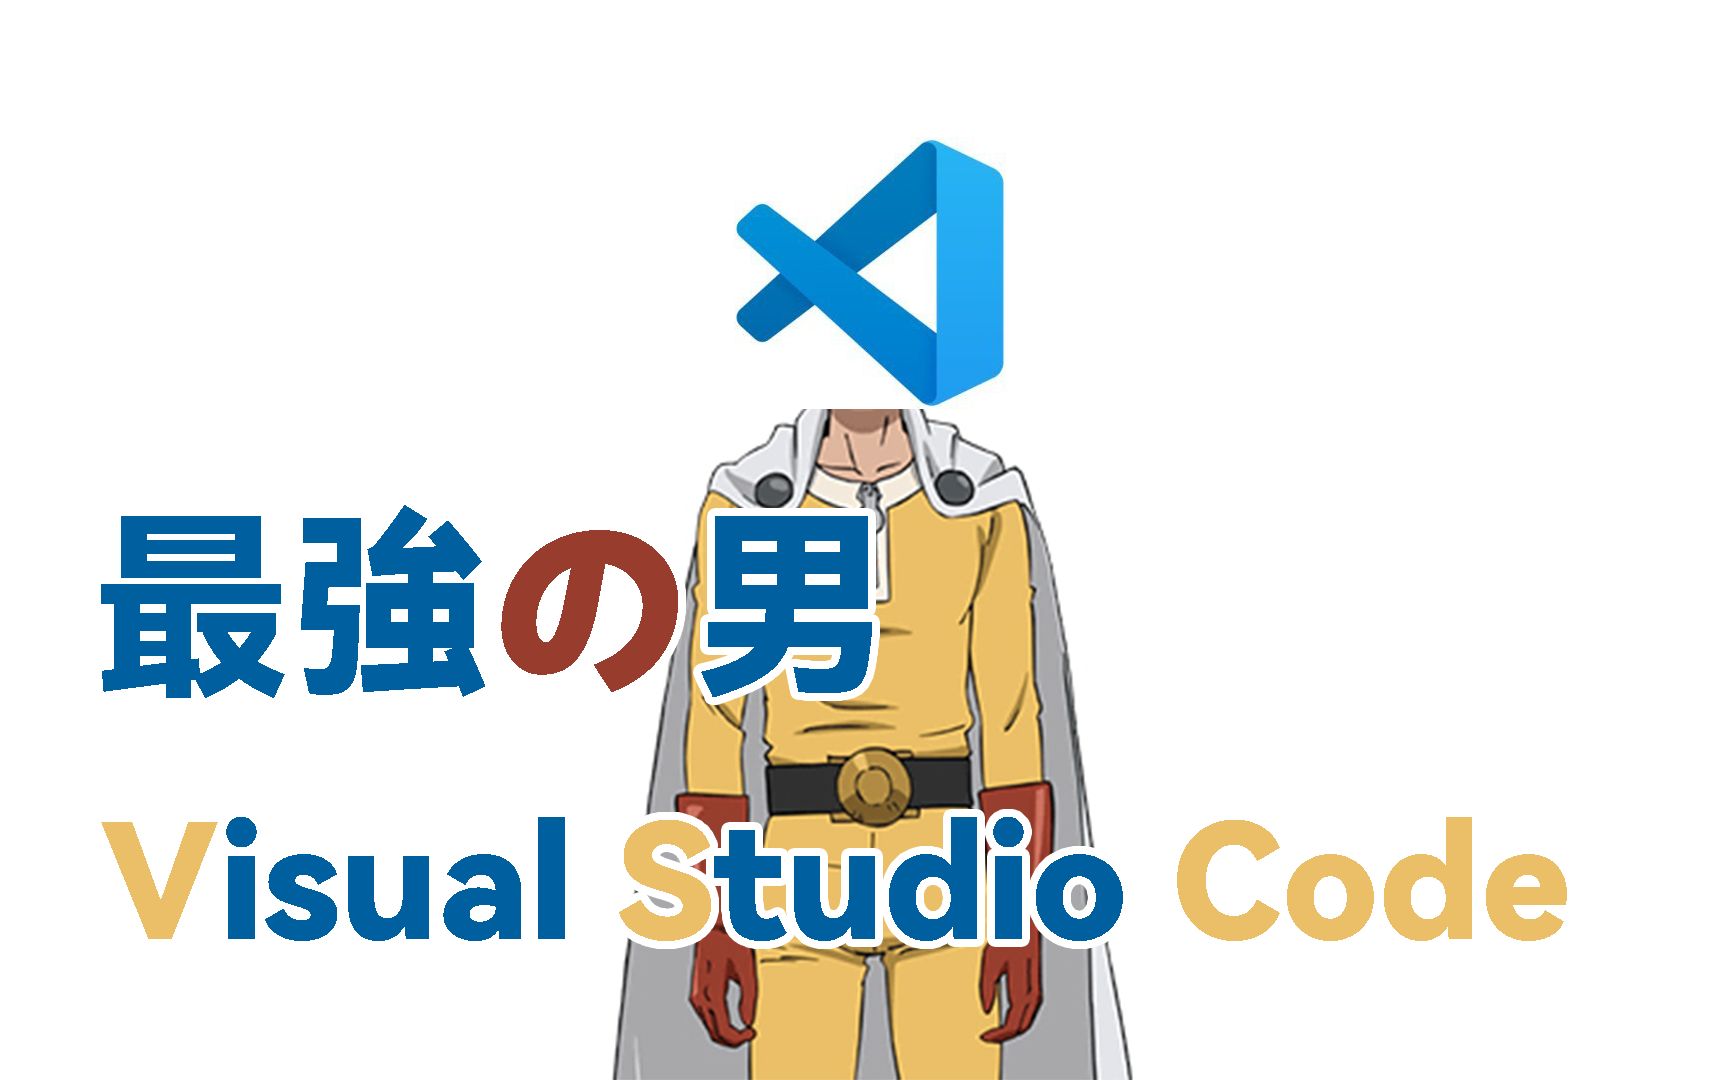 为什么 Visual Studio Code 被誉为 IDE 中最强的男人？